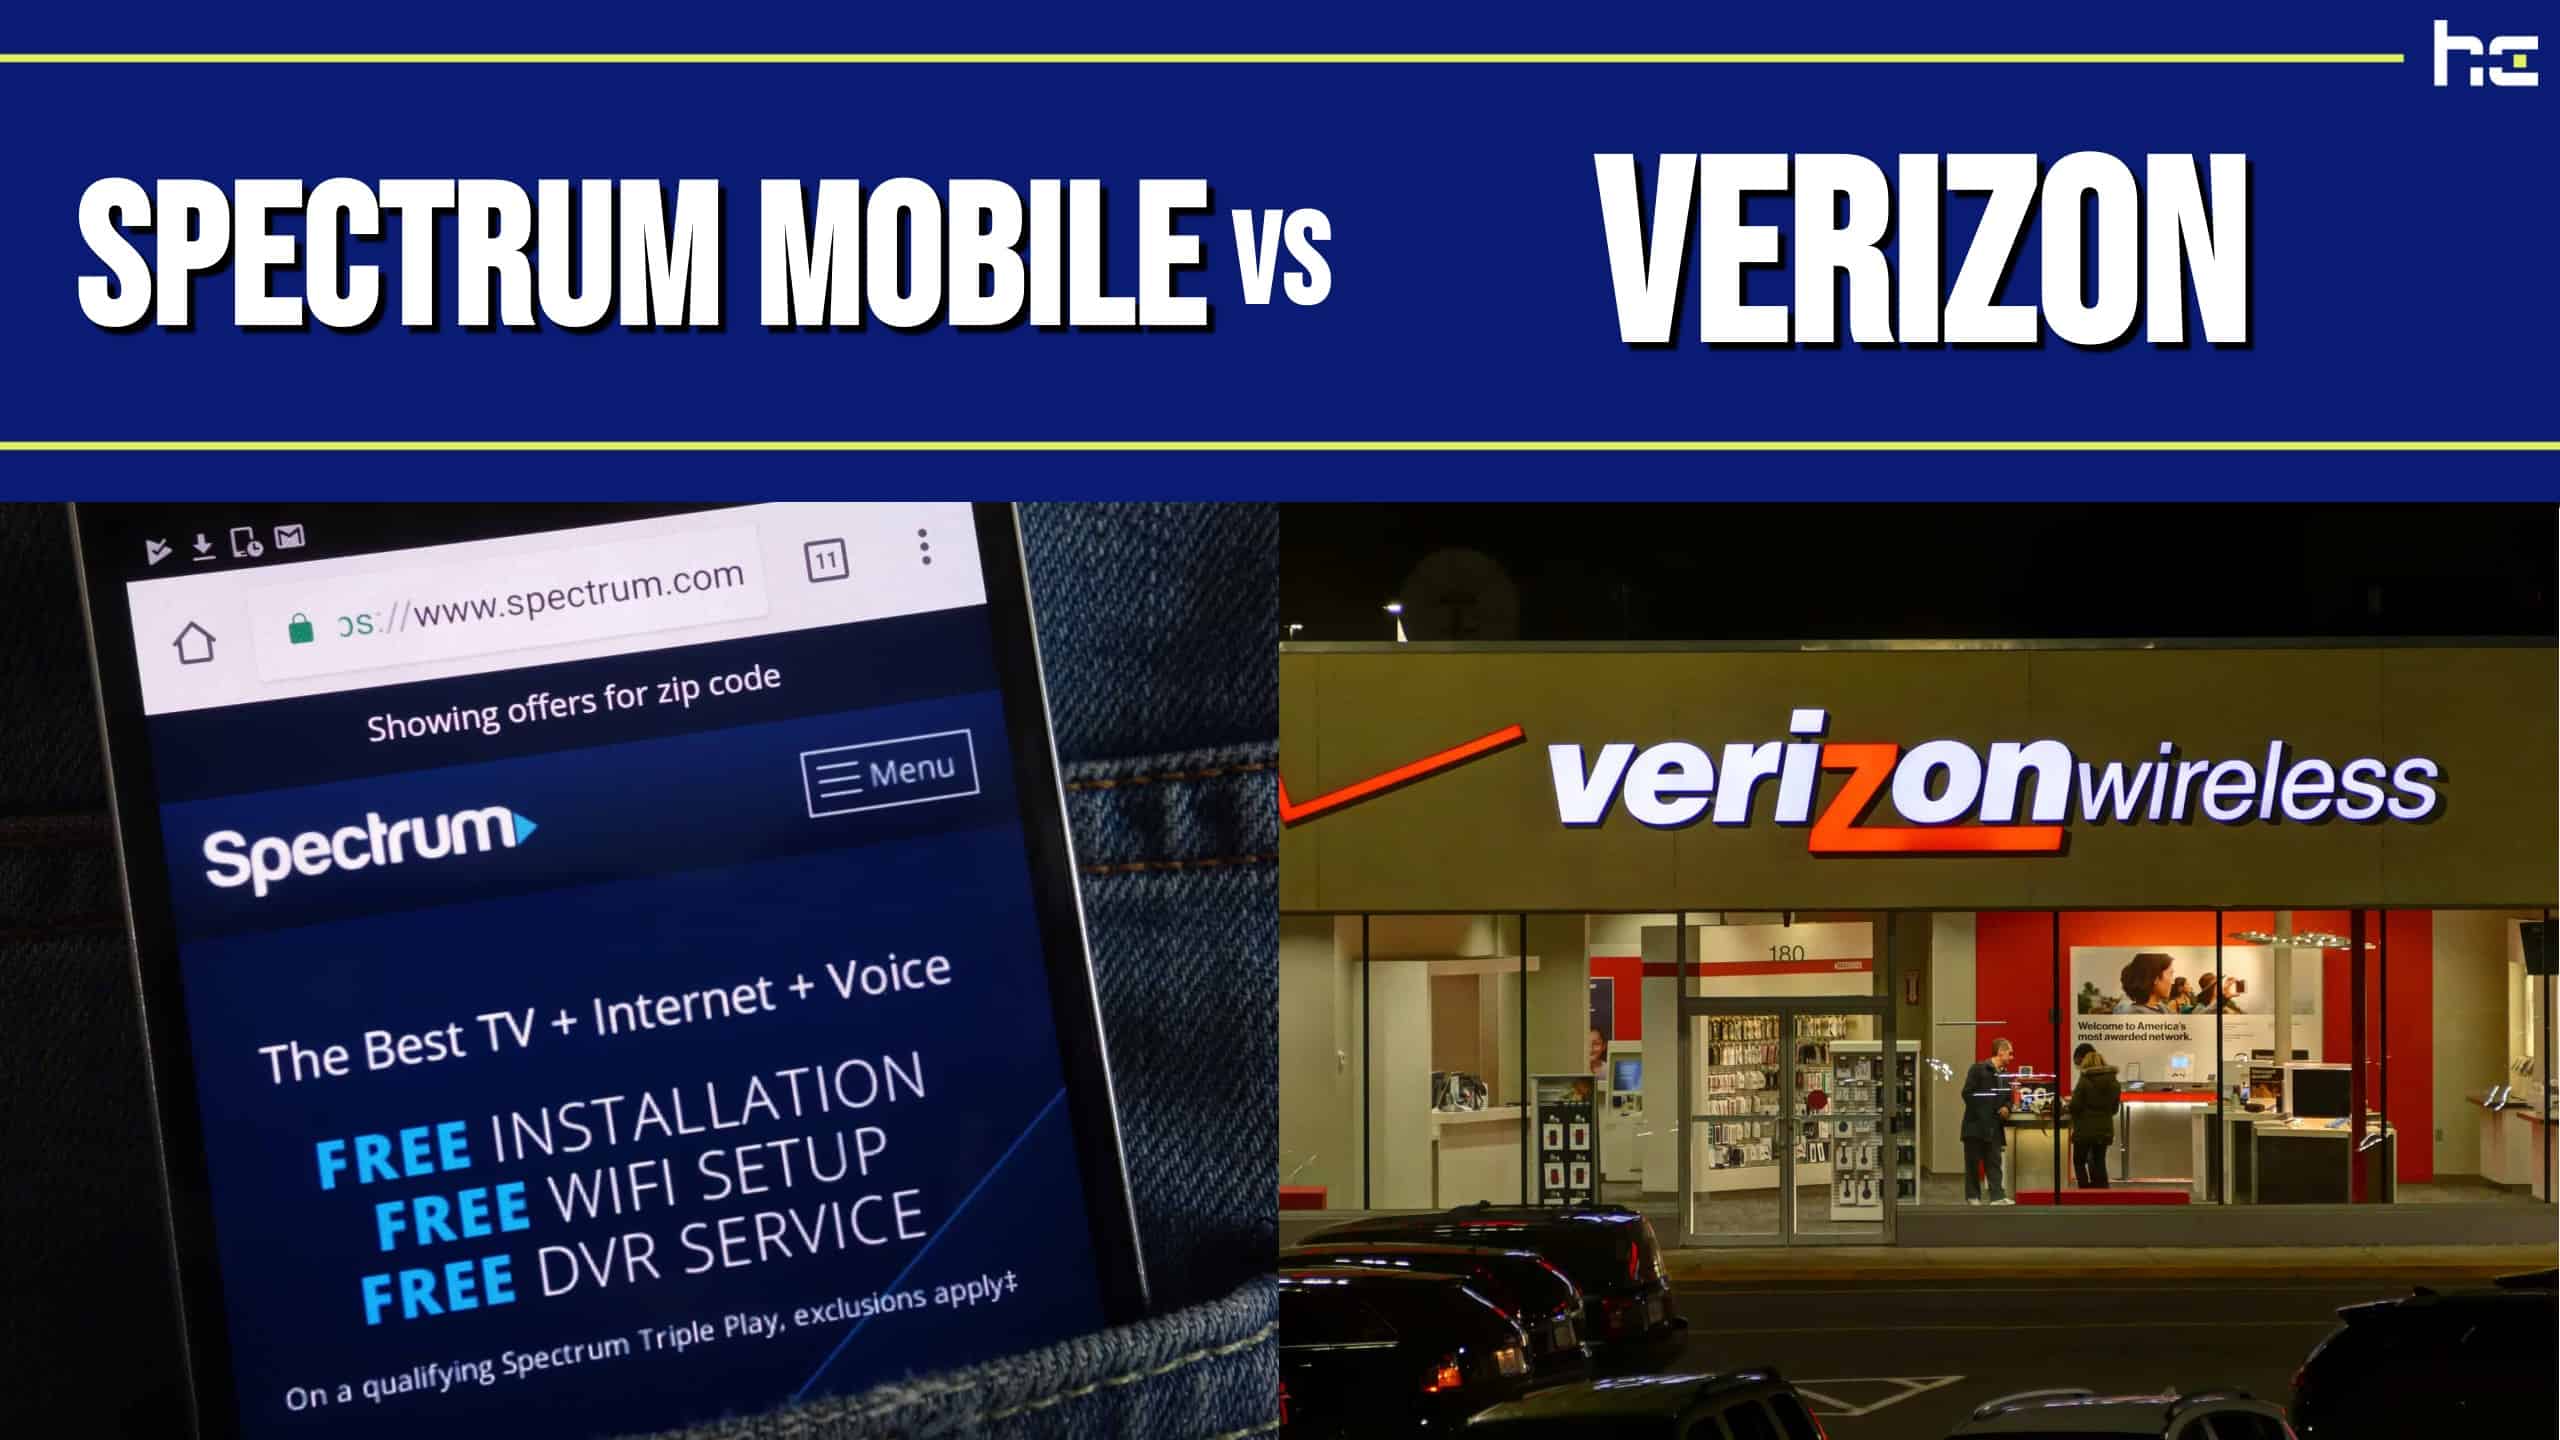 Spectrum Mobile vs Verizon featured image